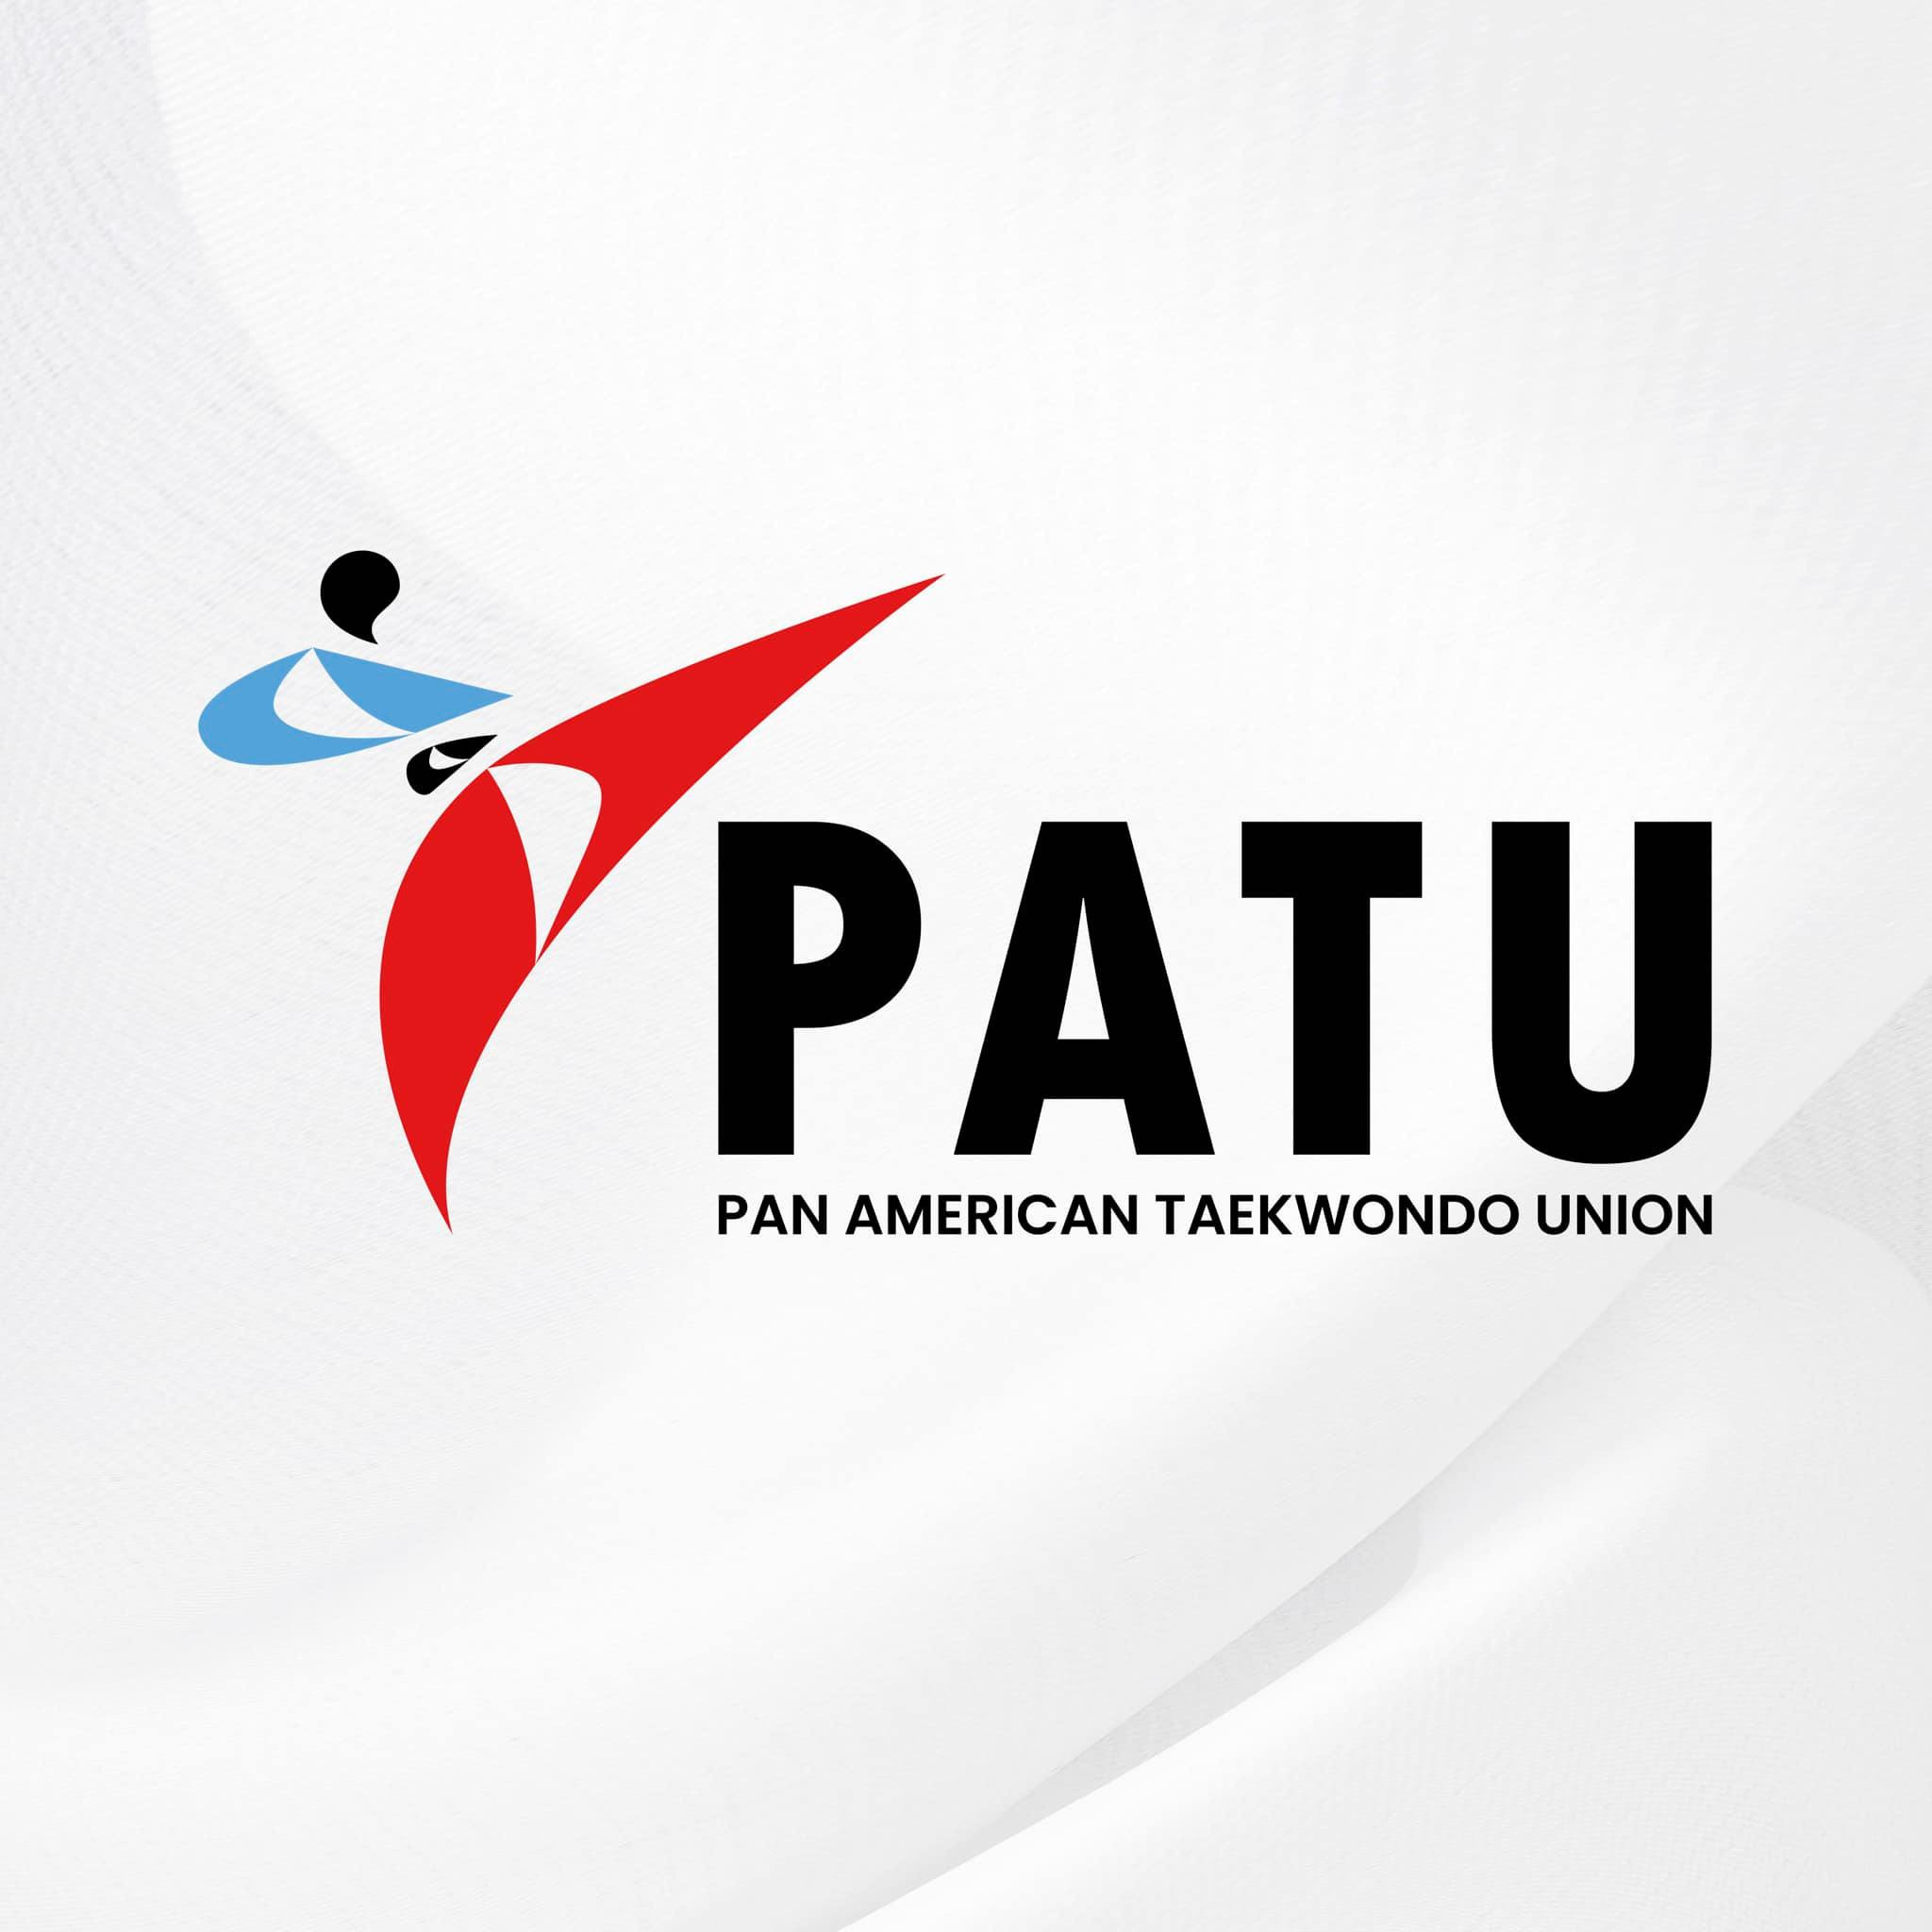 Pan American Taekwondo Union adopts new logo